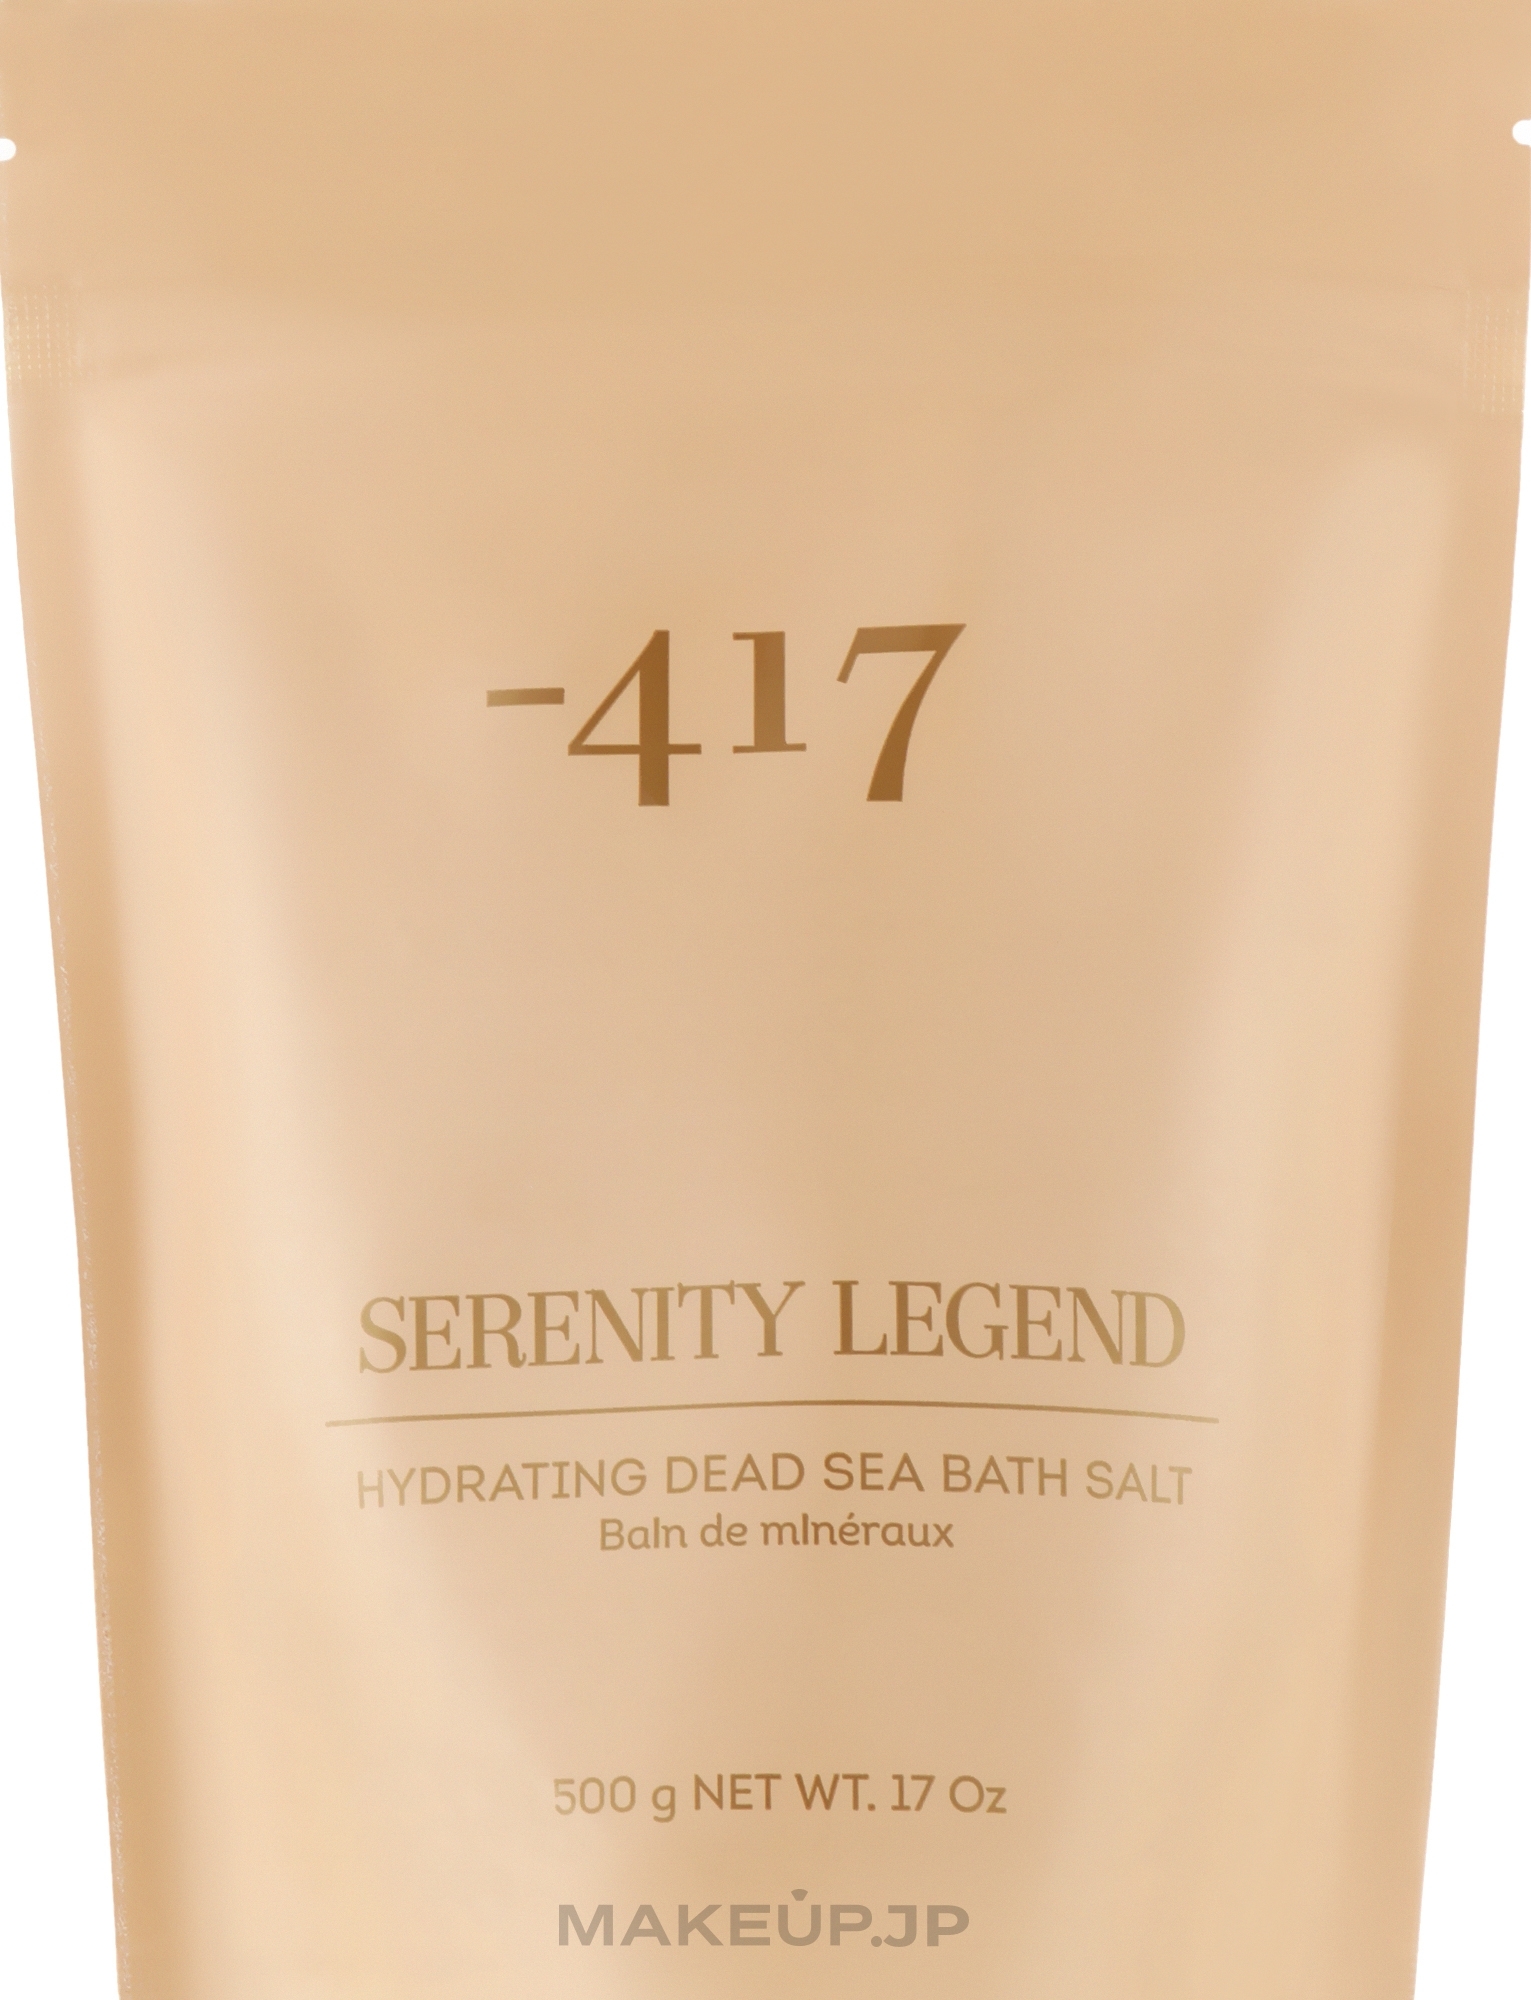 Dead Sea Bath Salt - -417 Serenity Legend Hydrating Dead Sea Bath Salt — photo 500 g